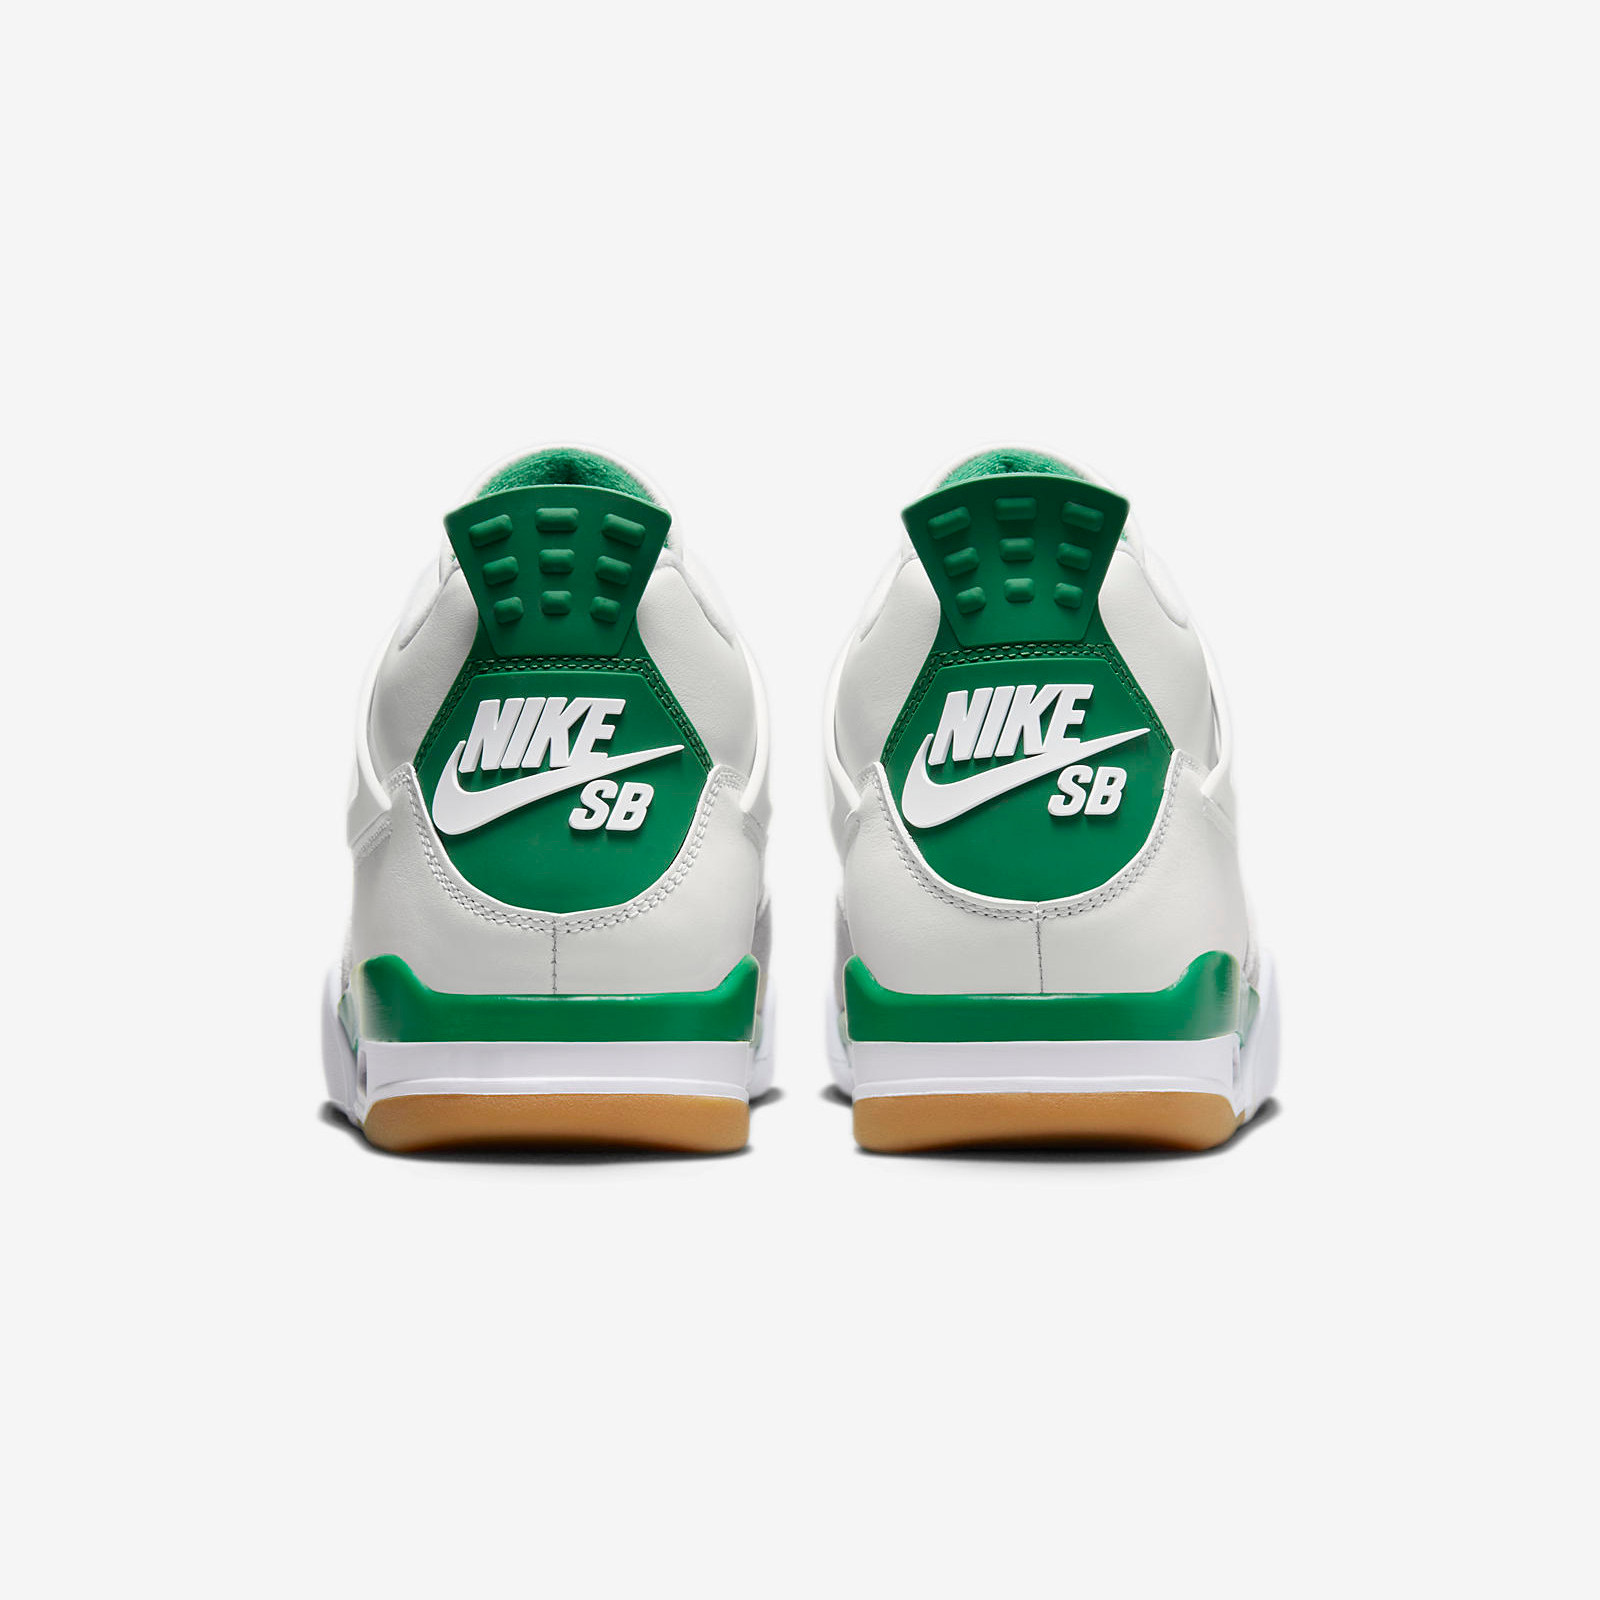 Nike SB x Air Jordan 4
Retro « Pine Green »